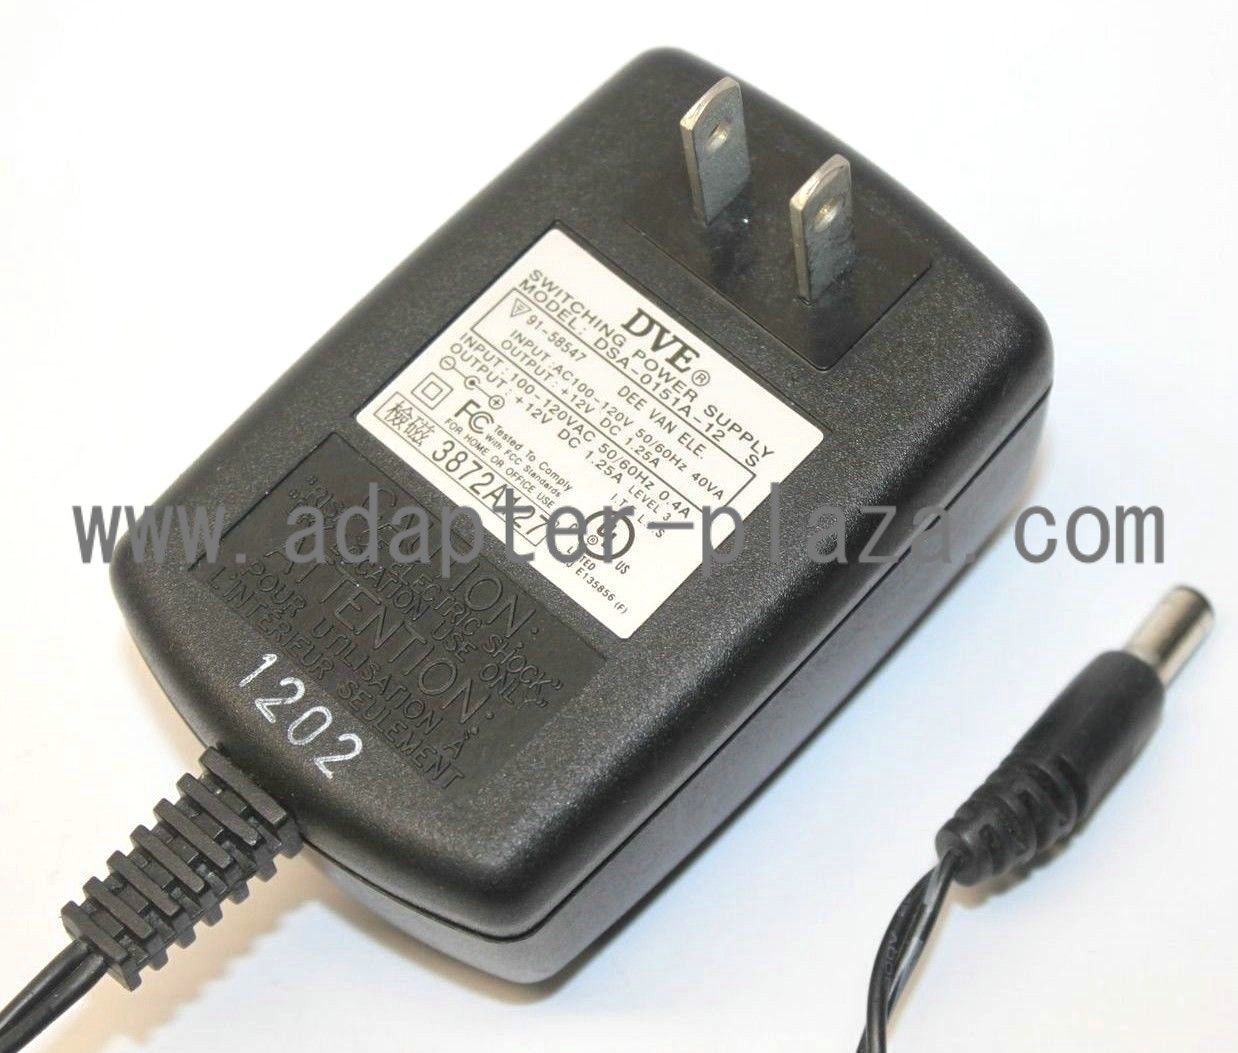 New Genuine DVE DSA-0151A-12 12V 1.25A Switching Power Supply AC Adapter Round Barrel plug - Click Image to Close